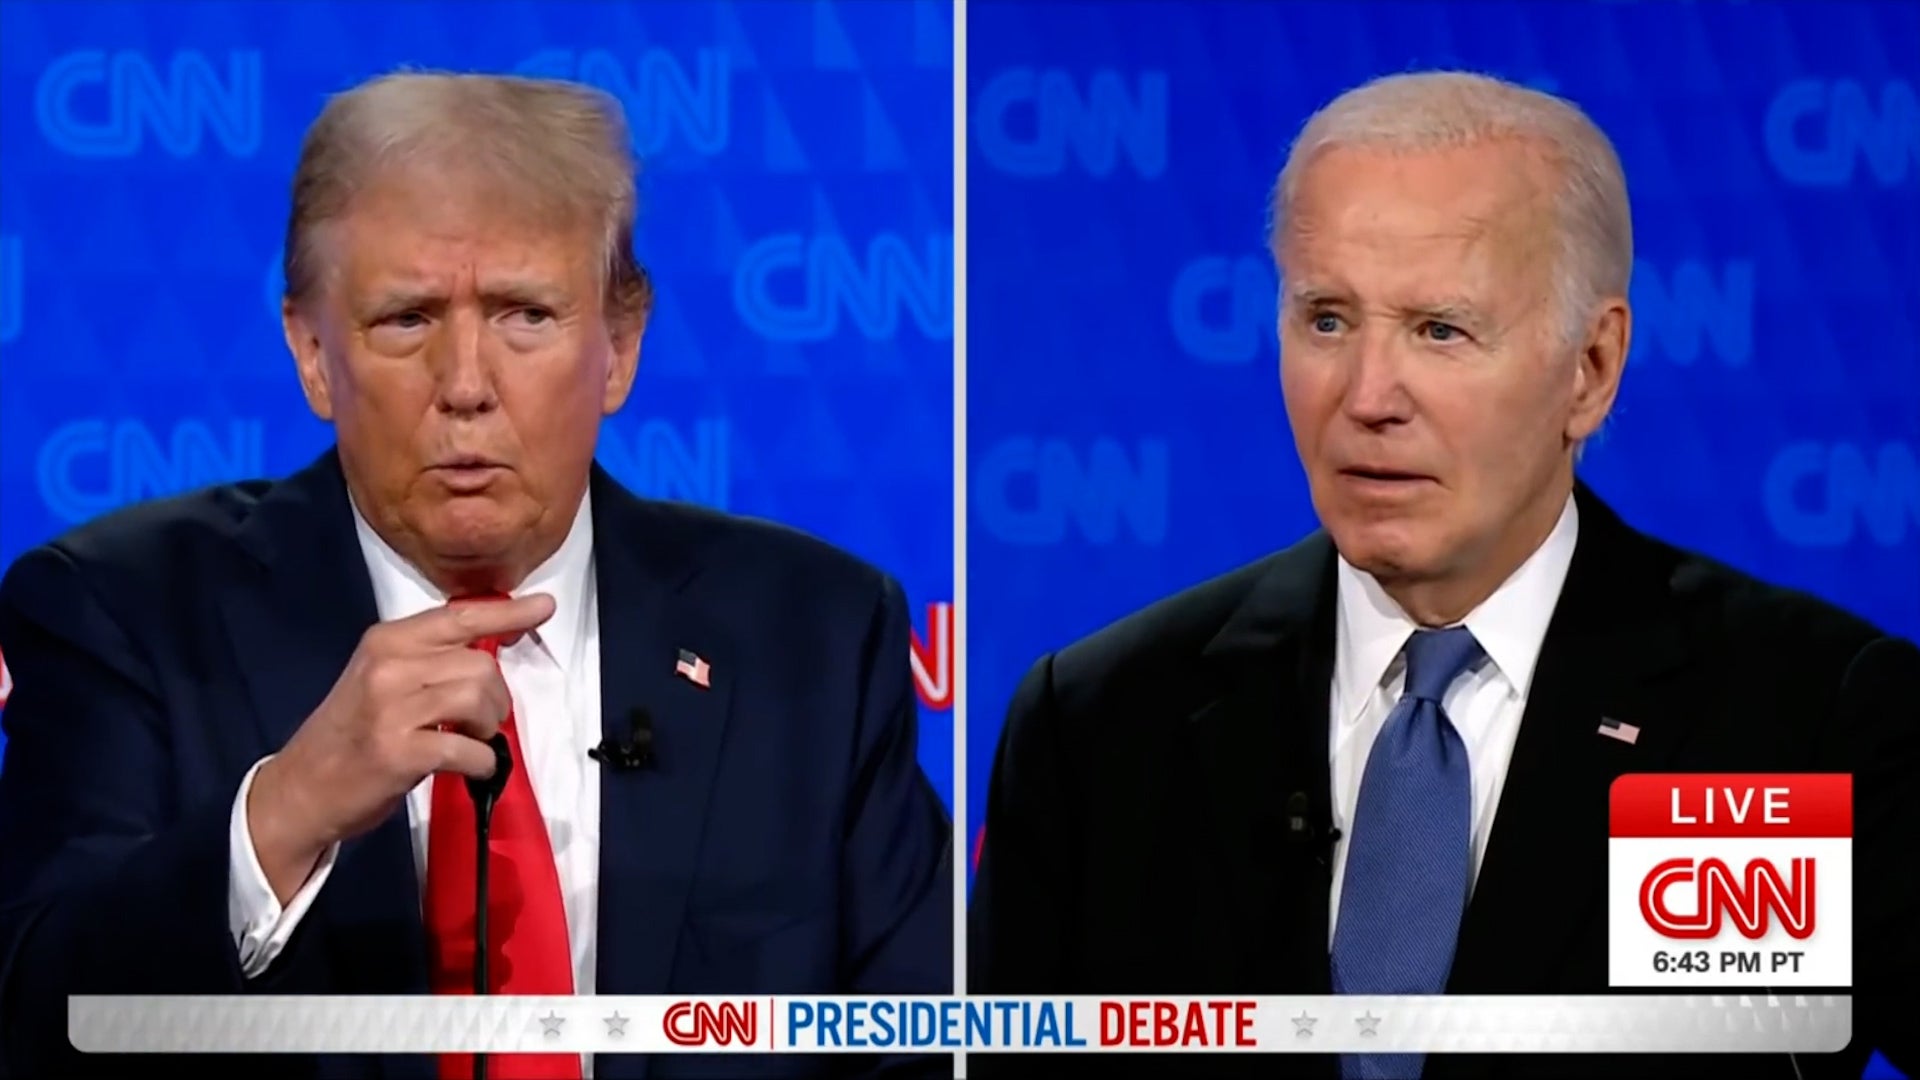 Trump and Biden appear at Thursday’s CNN debate in Atlanta